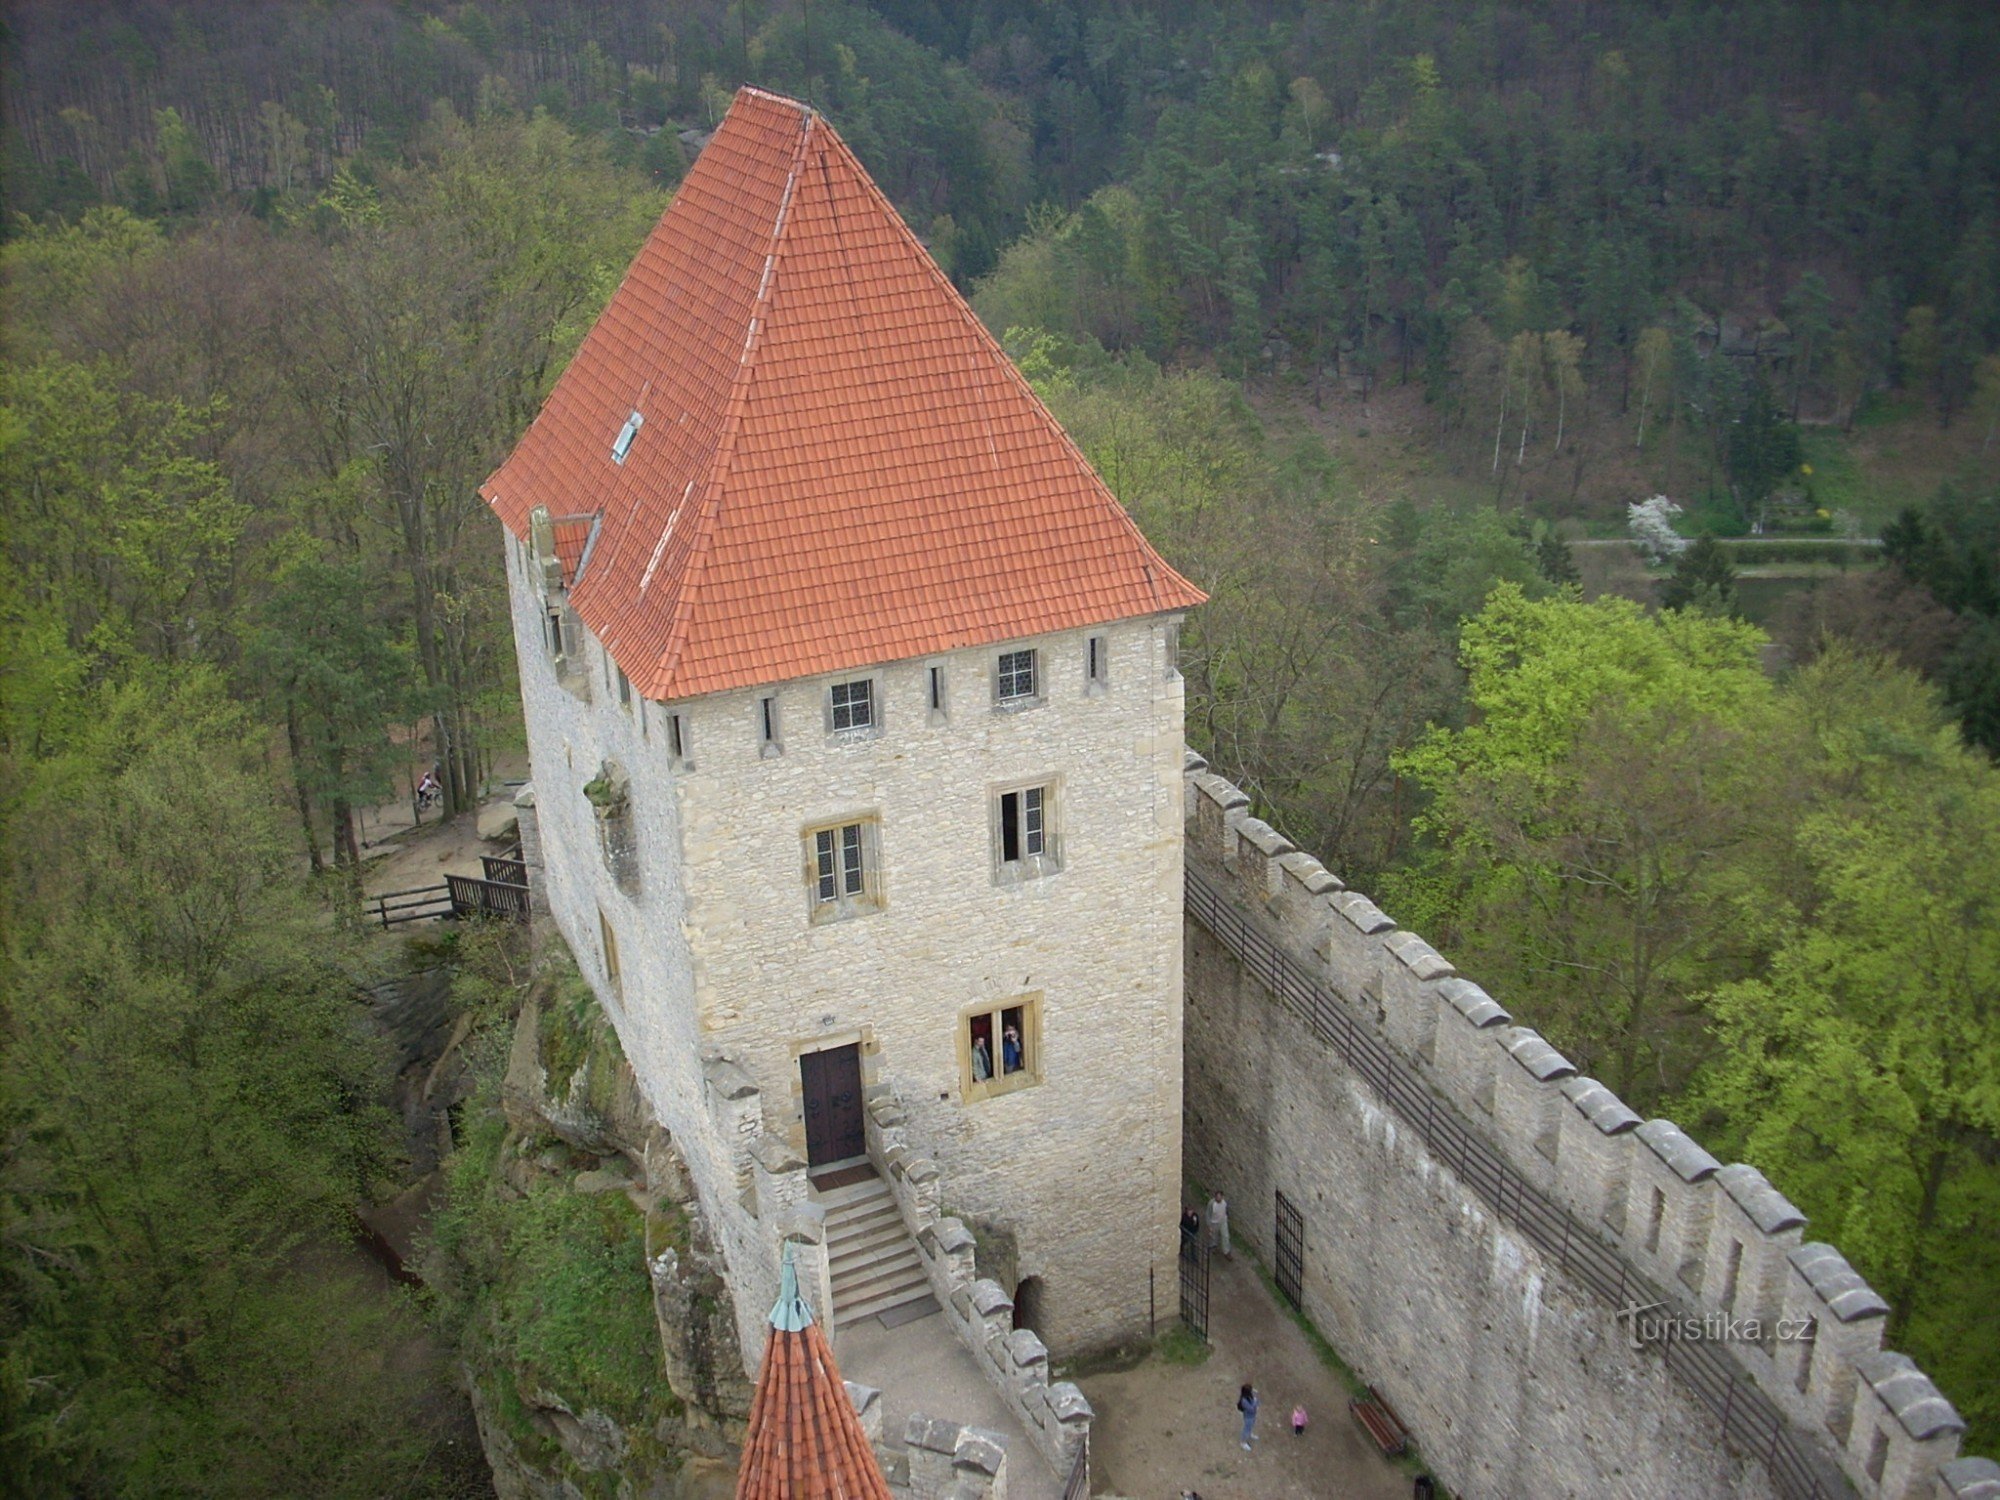 Kokořín from the tower